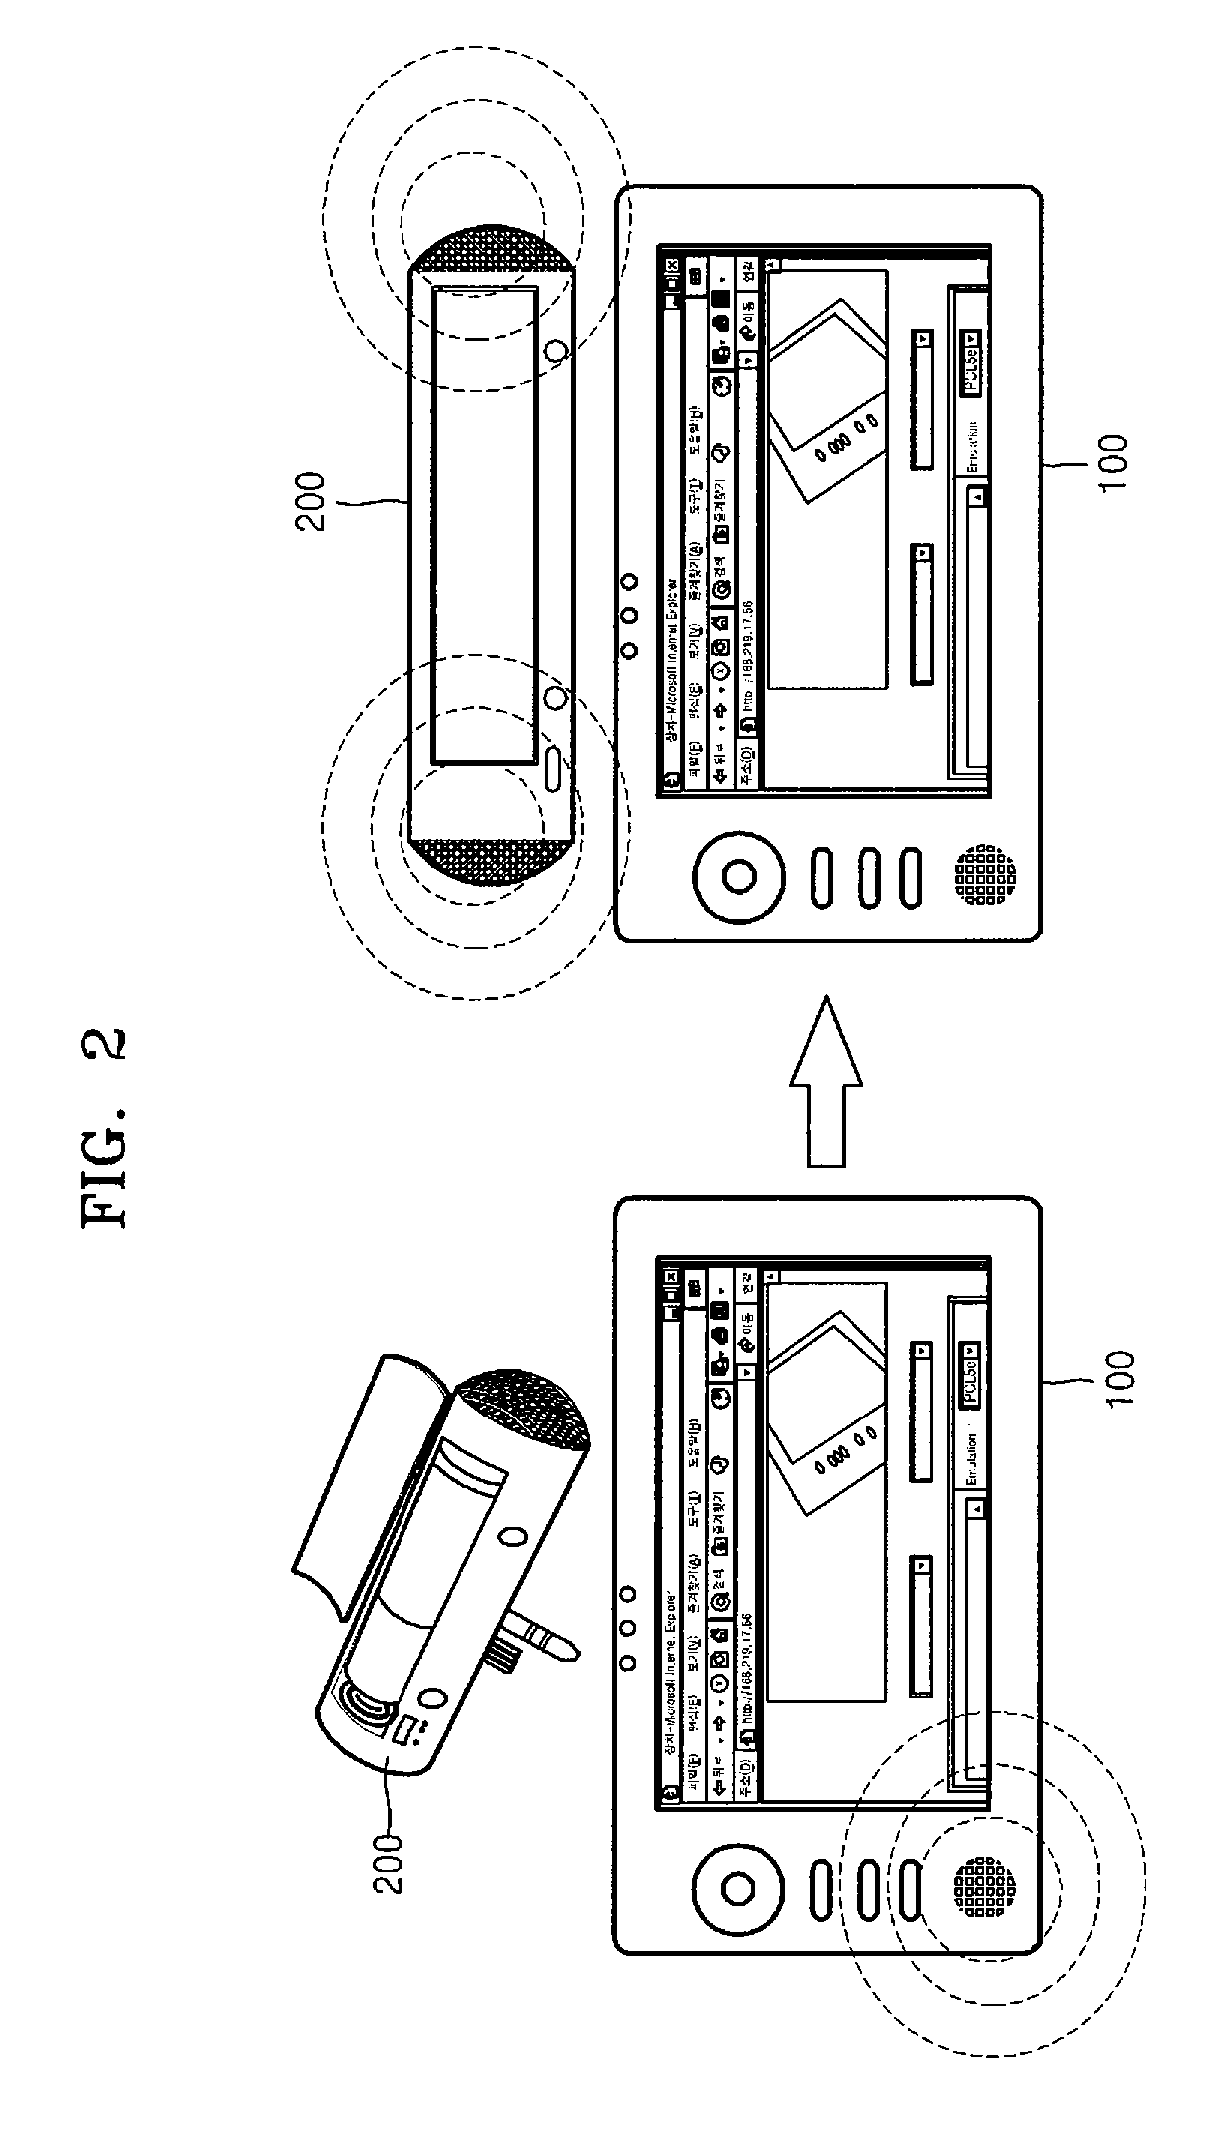 Portable speaker of portable multimedia device